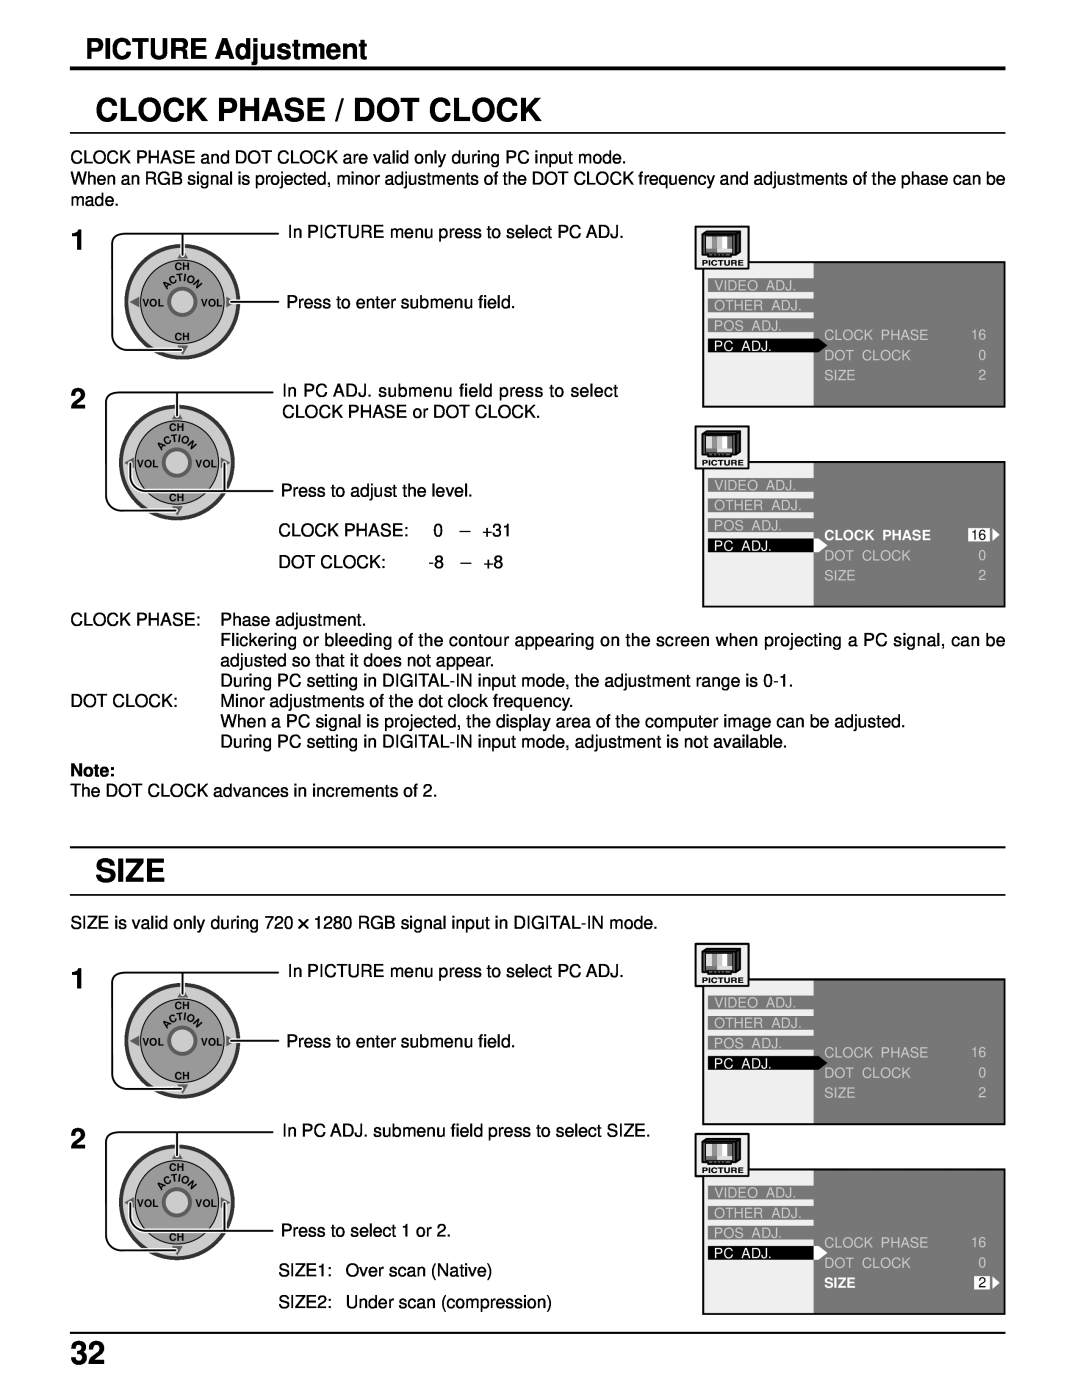 Panasonic PT 52DL52 manual Clock Phase / Dot Clock, Size, PICTURE Adjustment 